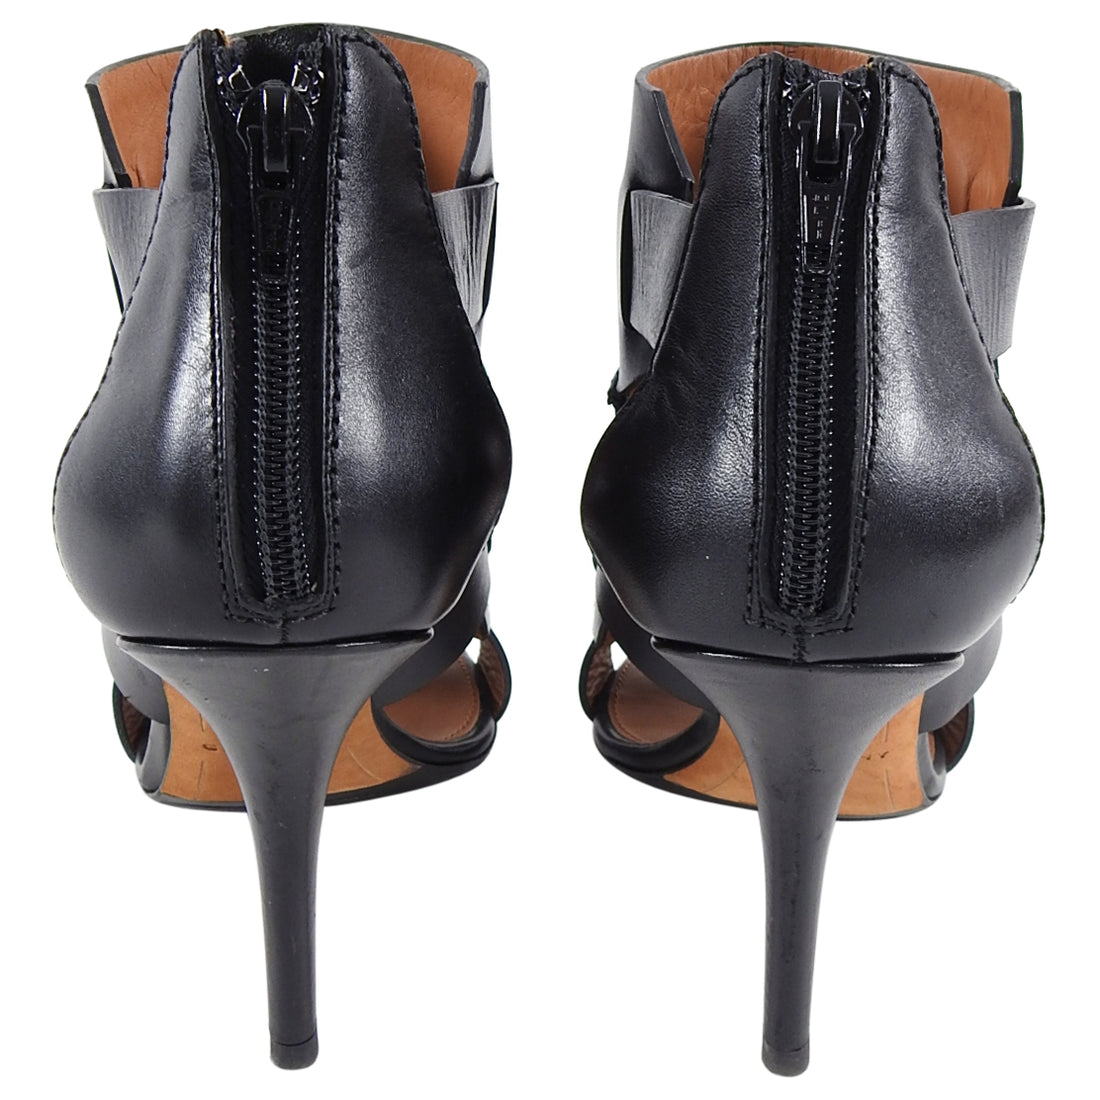 Givenchy Black Leather Gladiator High Heel Sandals - 40